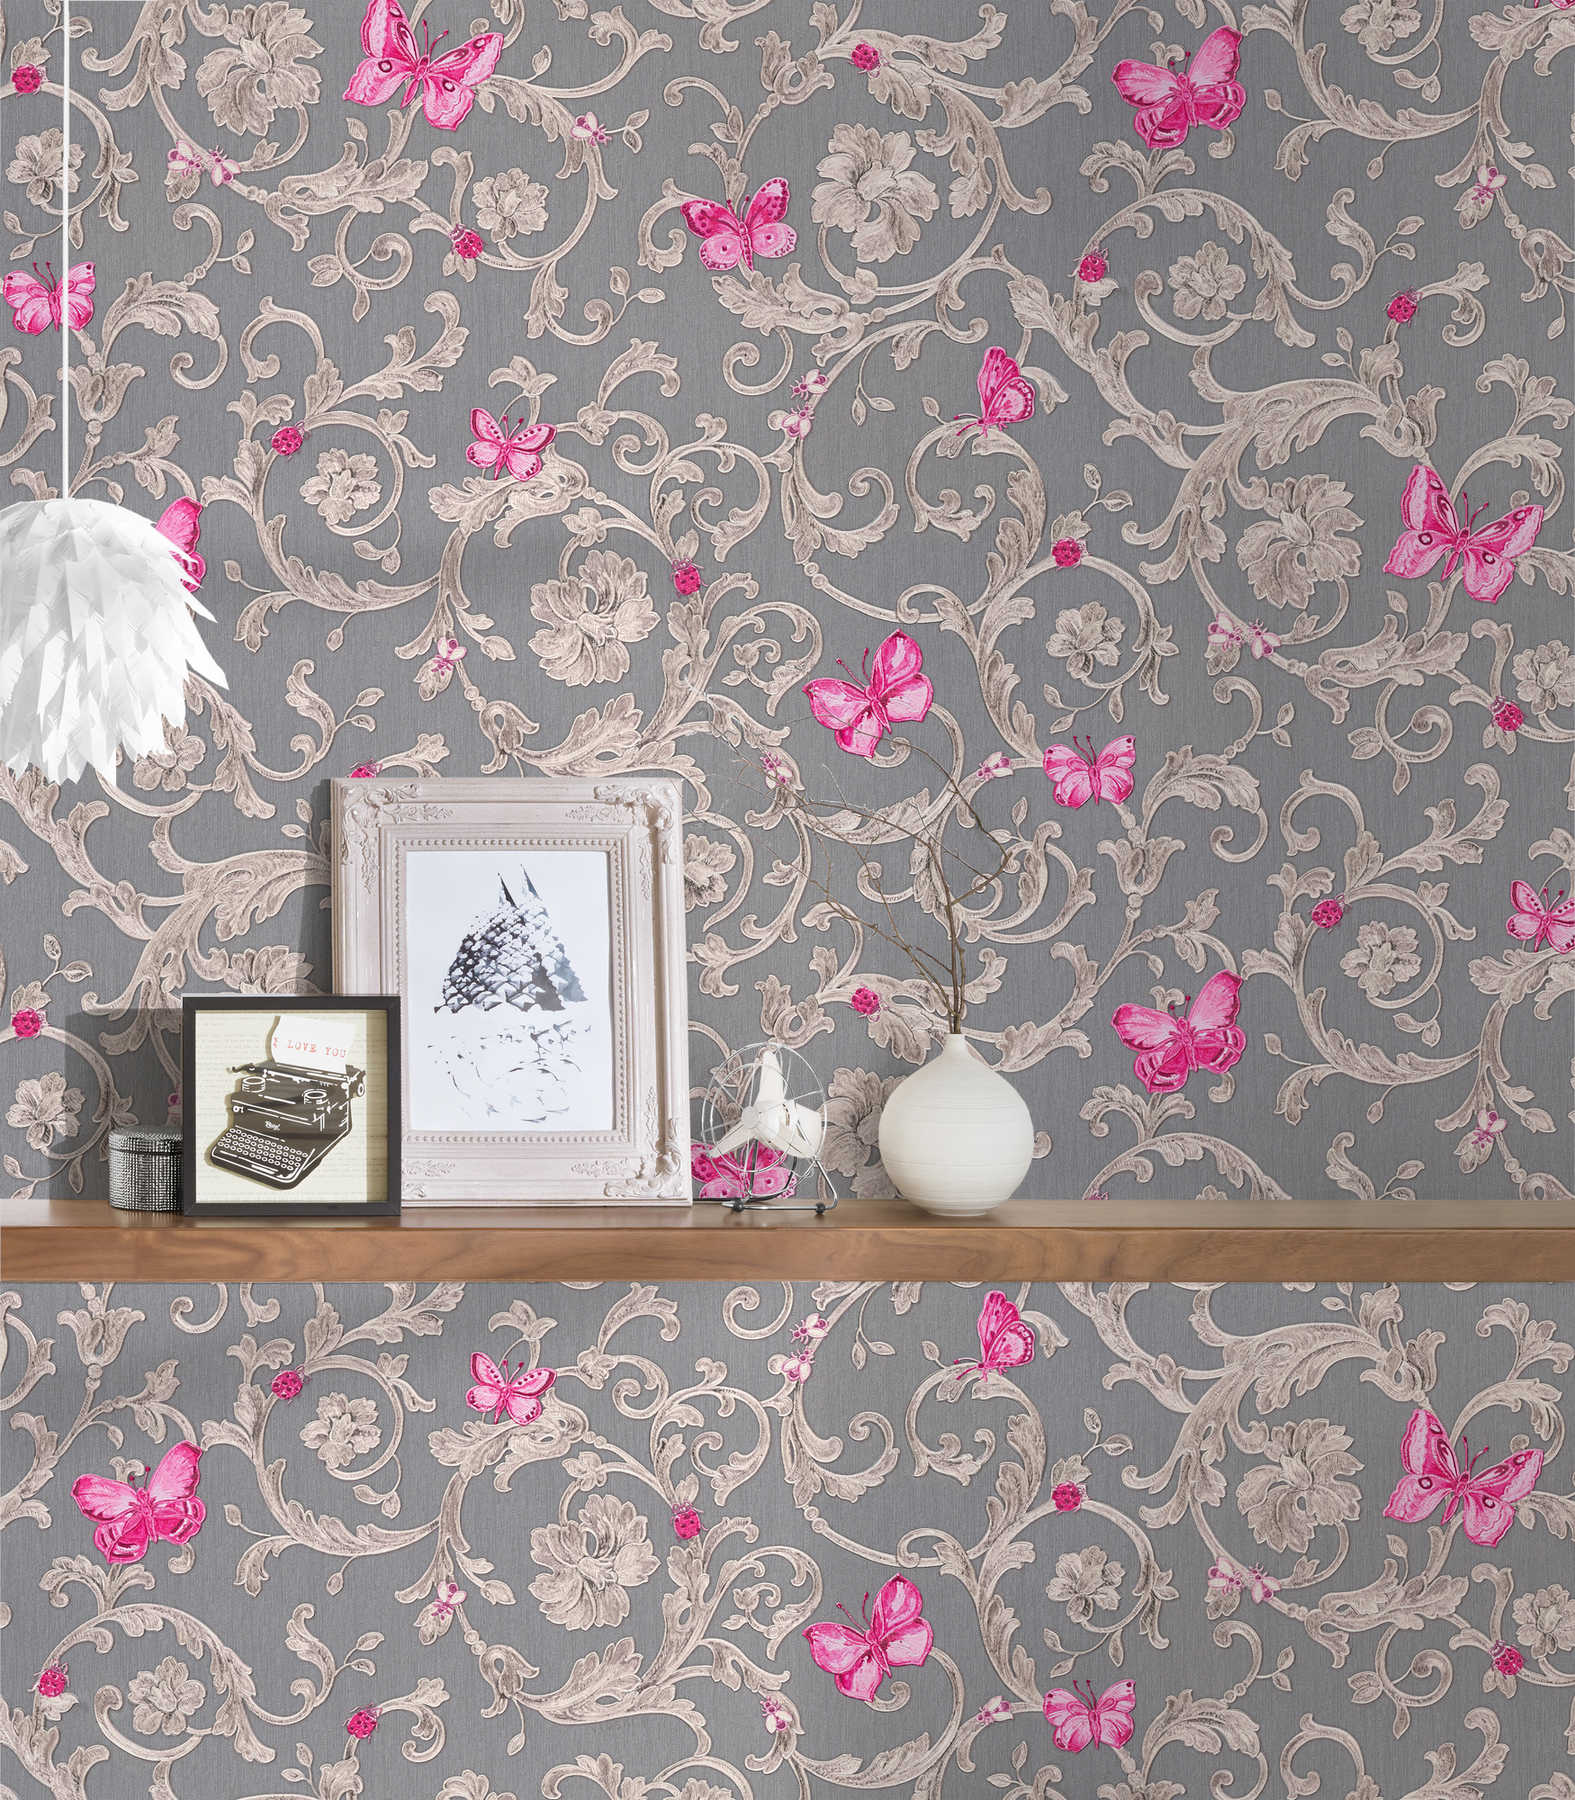             VERSACE wallpaper with butterflies & ornaments - grey, purple
        